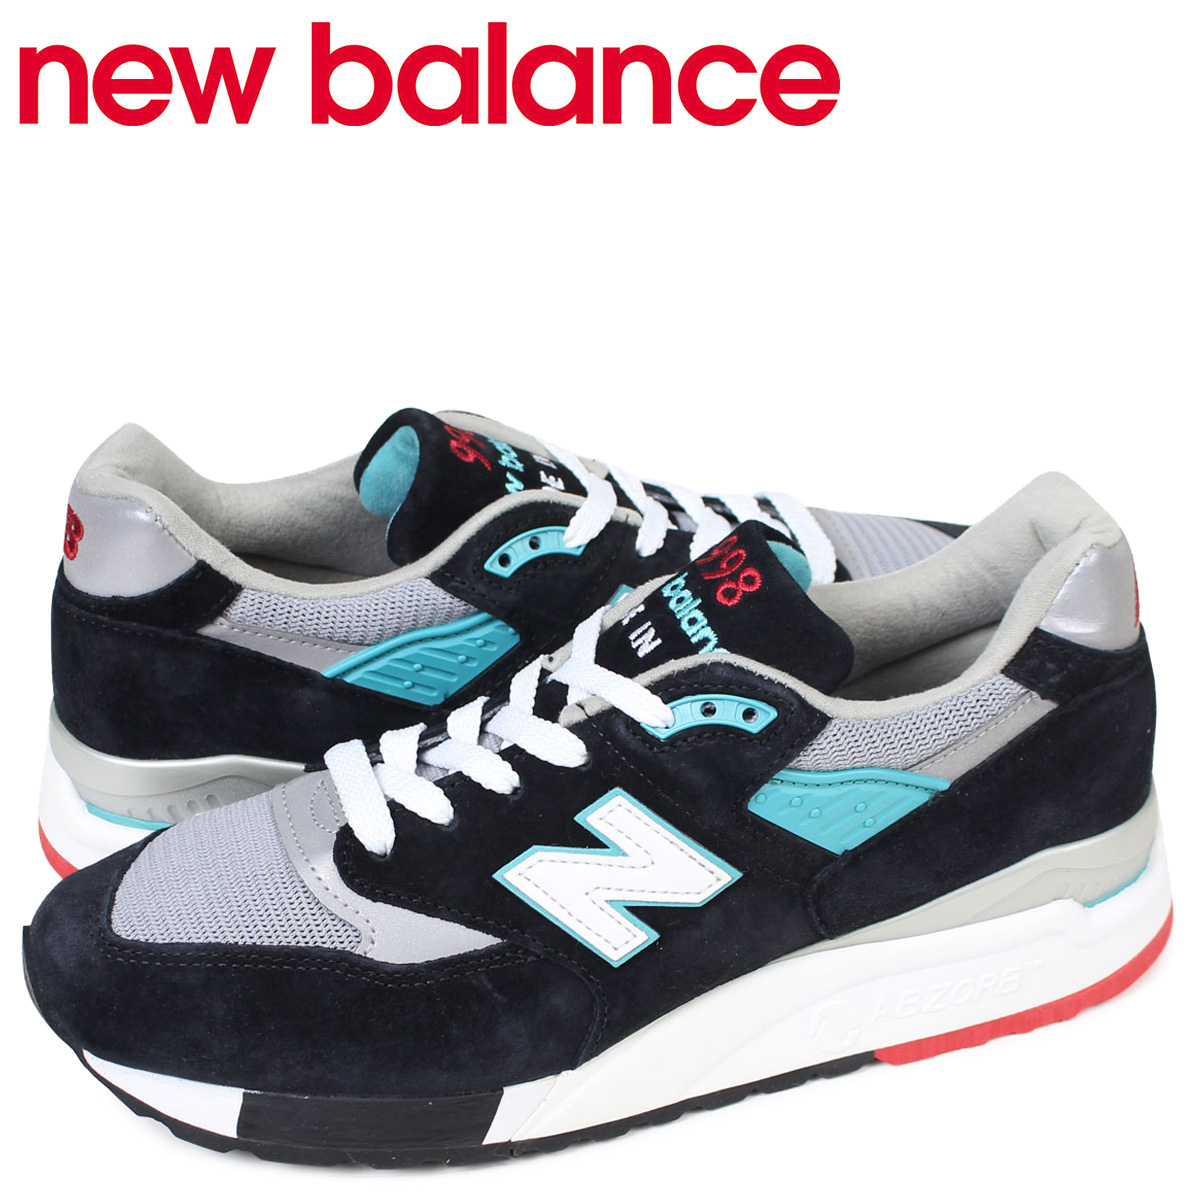 new balance 998 mens sale